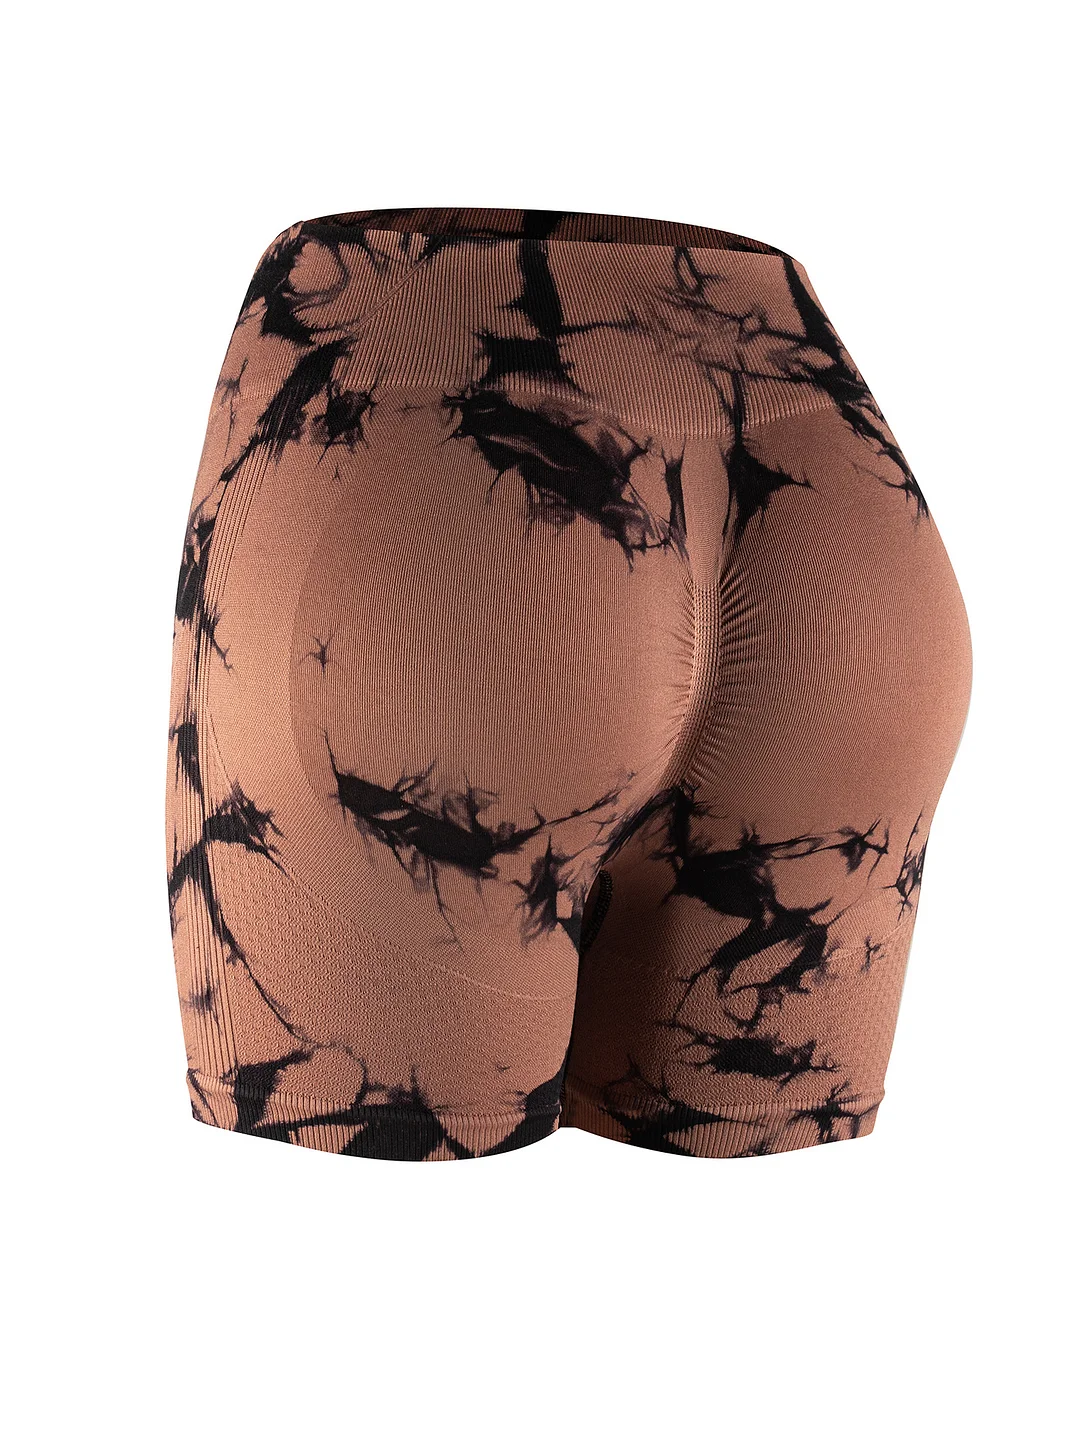 PASUXI Summer Seamless Hot Selling Pants High Waist Lady Gym Fitness Yoga Tie Dye Shorts Butt Lift Scrunch Women Shorts